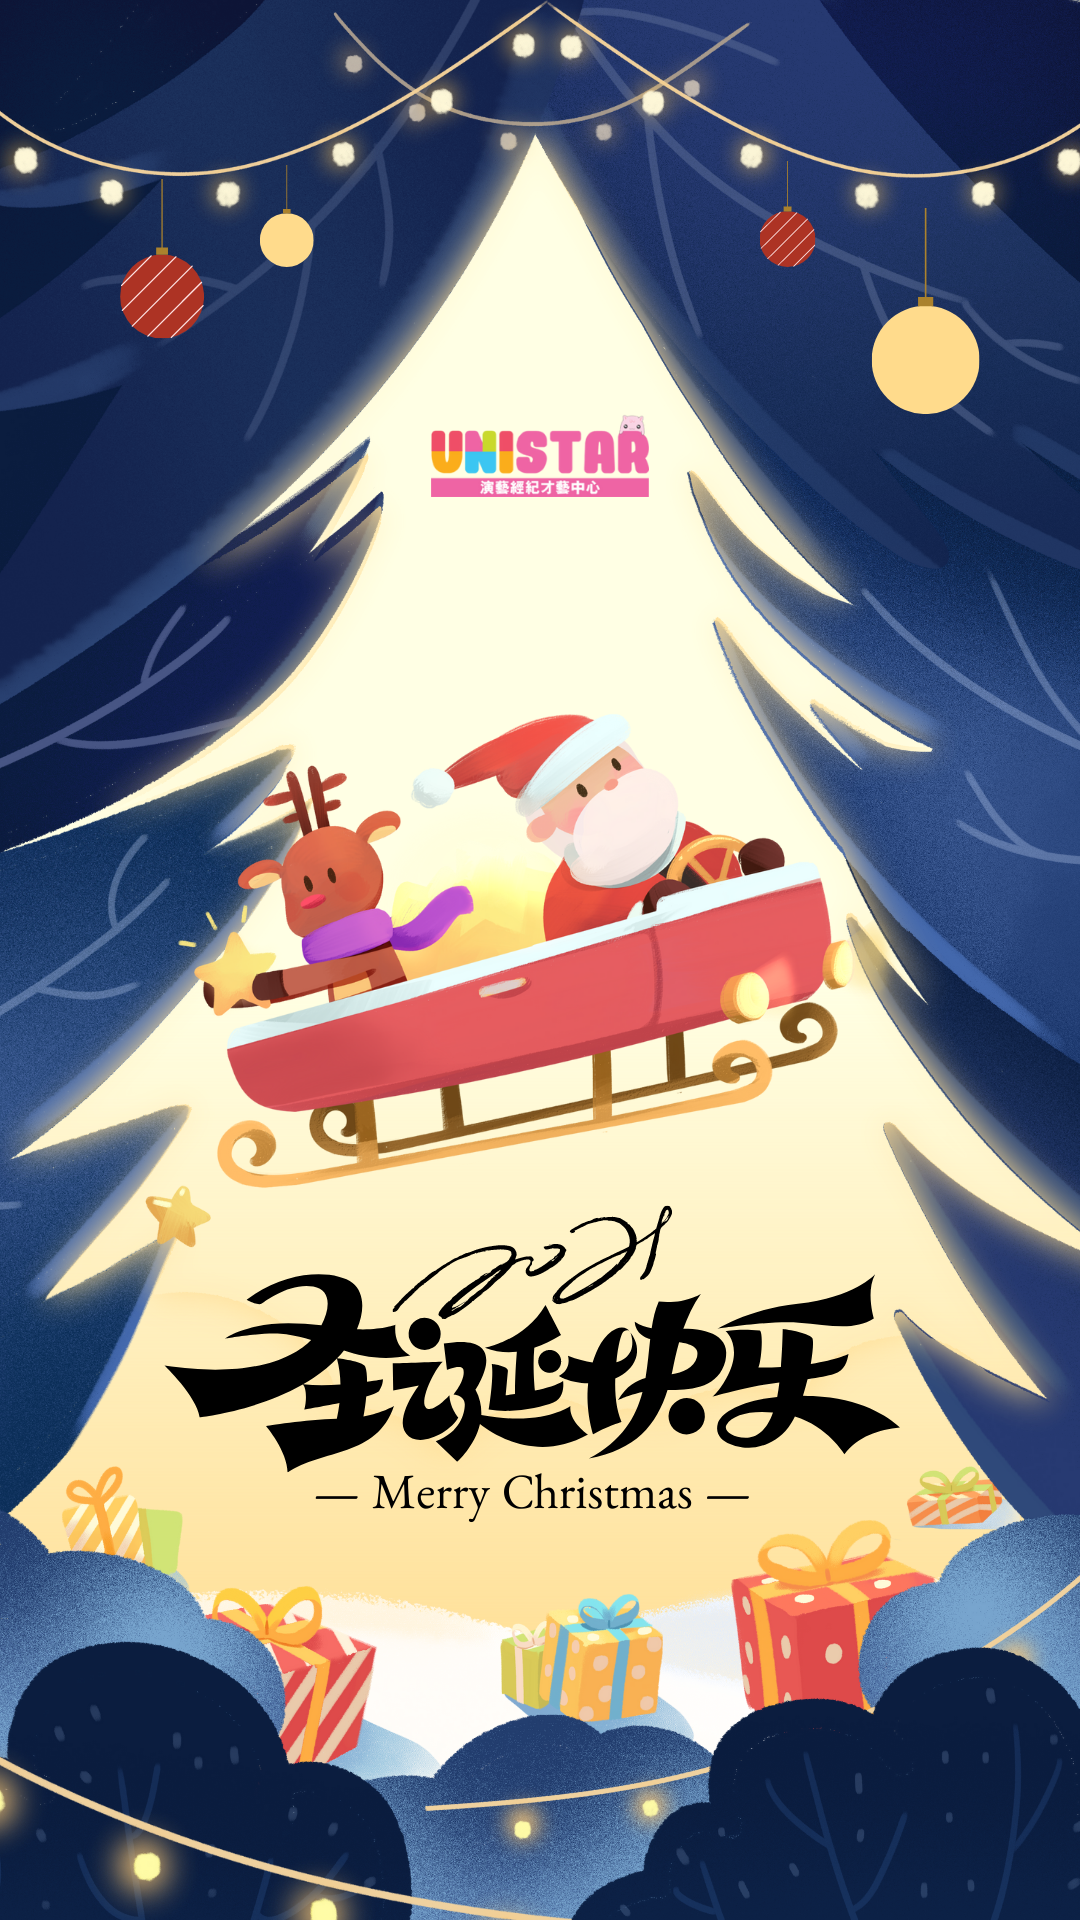 UniStar祝您和家人有一個幸福美好的聖誕假期🎄